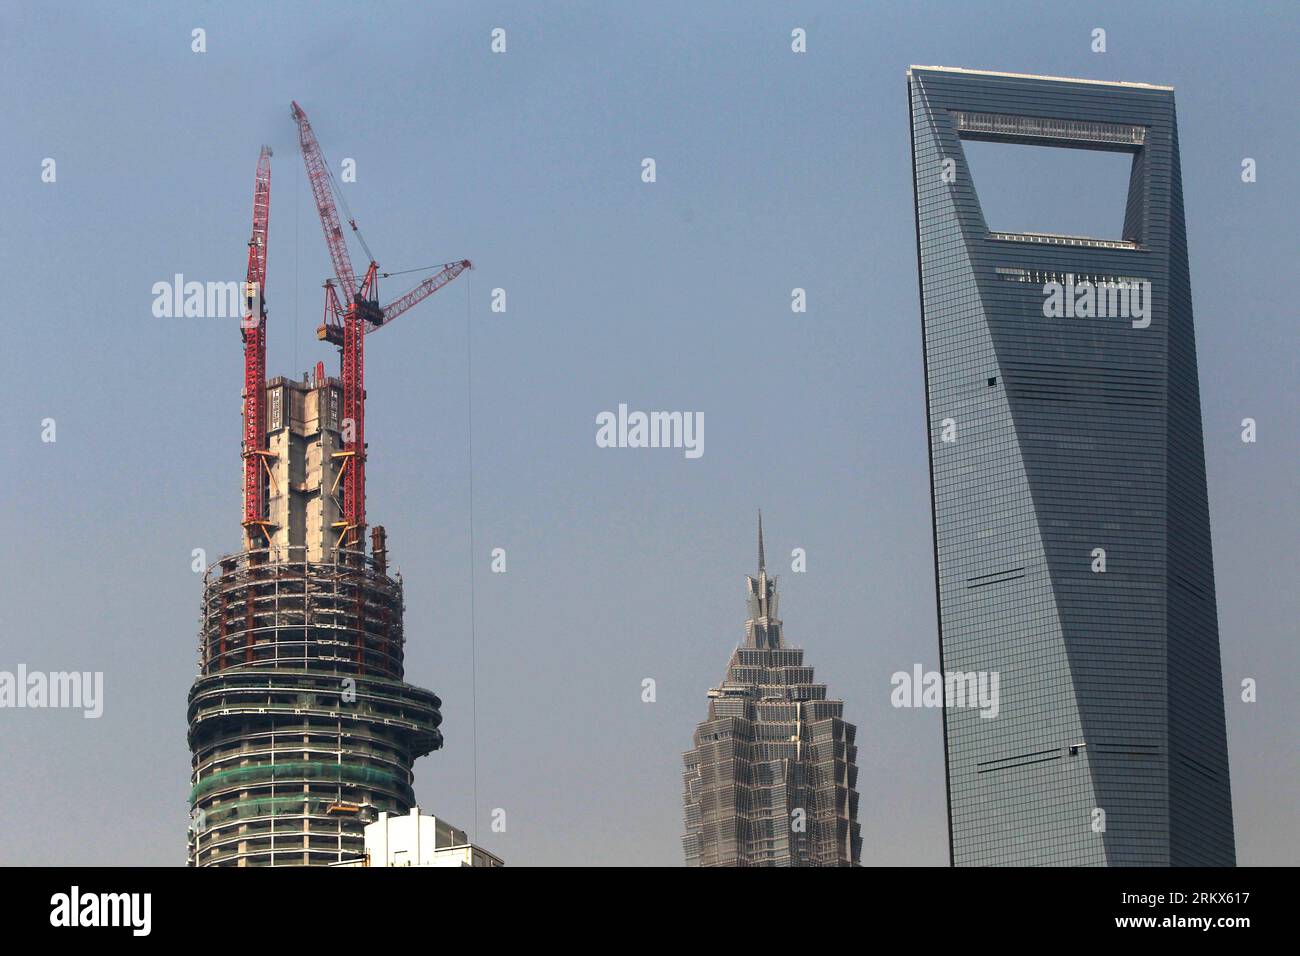 Bildnummer: 58896977  Datum: 08.12.2012  Copyright: imago/Xinhua (121208) -- SHANGHAI, Dec. 8, 2012 (Xinhua) -- Photo taken on Dec. 8, 2012 shows the Shanghai Tower (L), a skyscraper under construction, along with the neighbouring Jin Mao Tower (C) and the Shanghai World Financial Center in Pudong, east China s Shanghai Municipality. The Shanghai Tower is expected to reach 632 meters in height and start service in 2015. (Xinhua/Pei Xin) (lmm) CHINA-SHANGHAI-SKYSCRAPER-CONSTRUCTION (CN) PUBLICATIONxNOTxINxCHN Gesellschaft Wirtschaft Bau Baustelle Bauarbeiten Hochhaus Wolkenkratzer x0x xdd premi Stock Photo